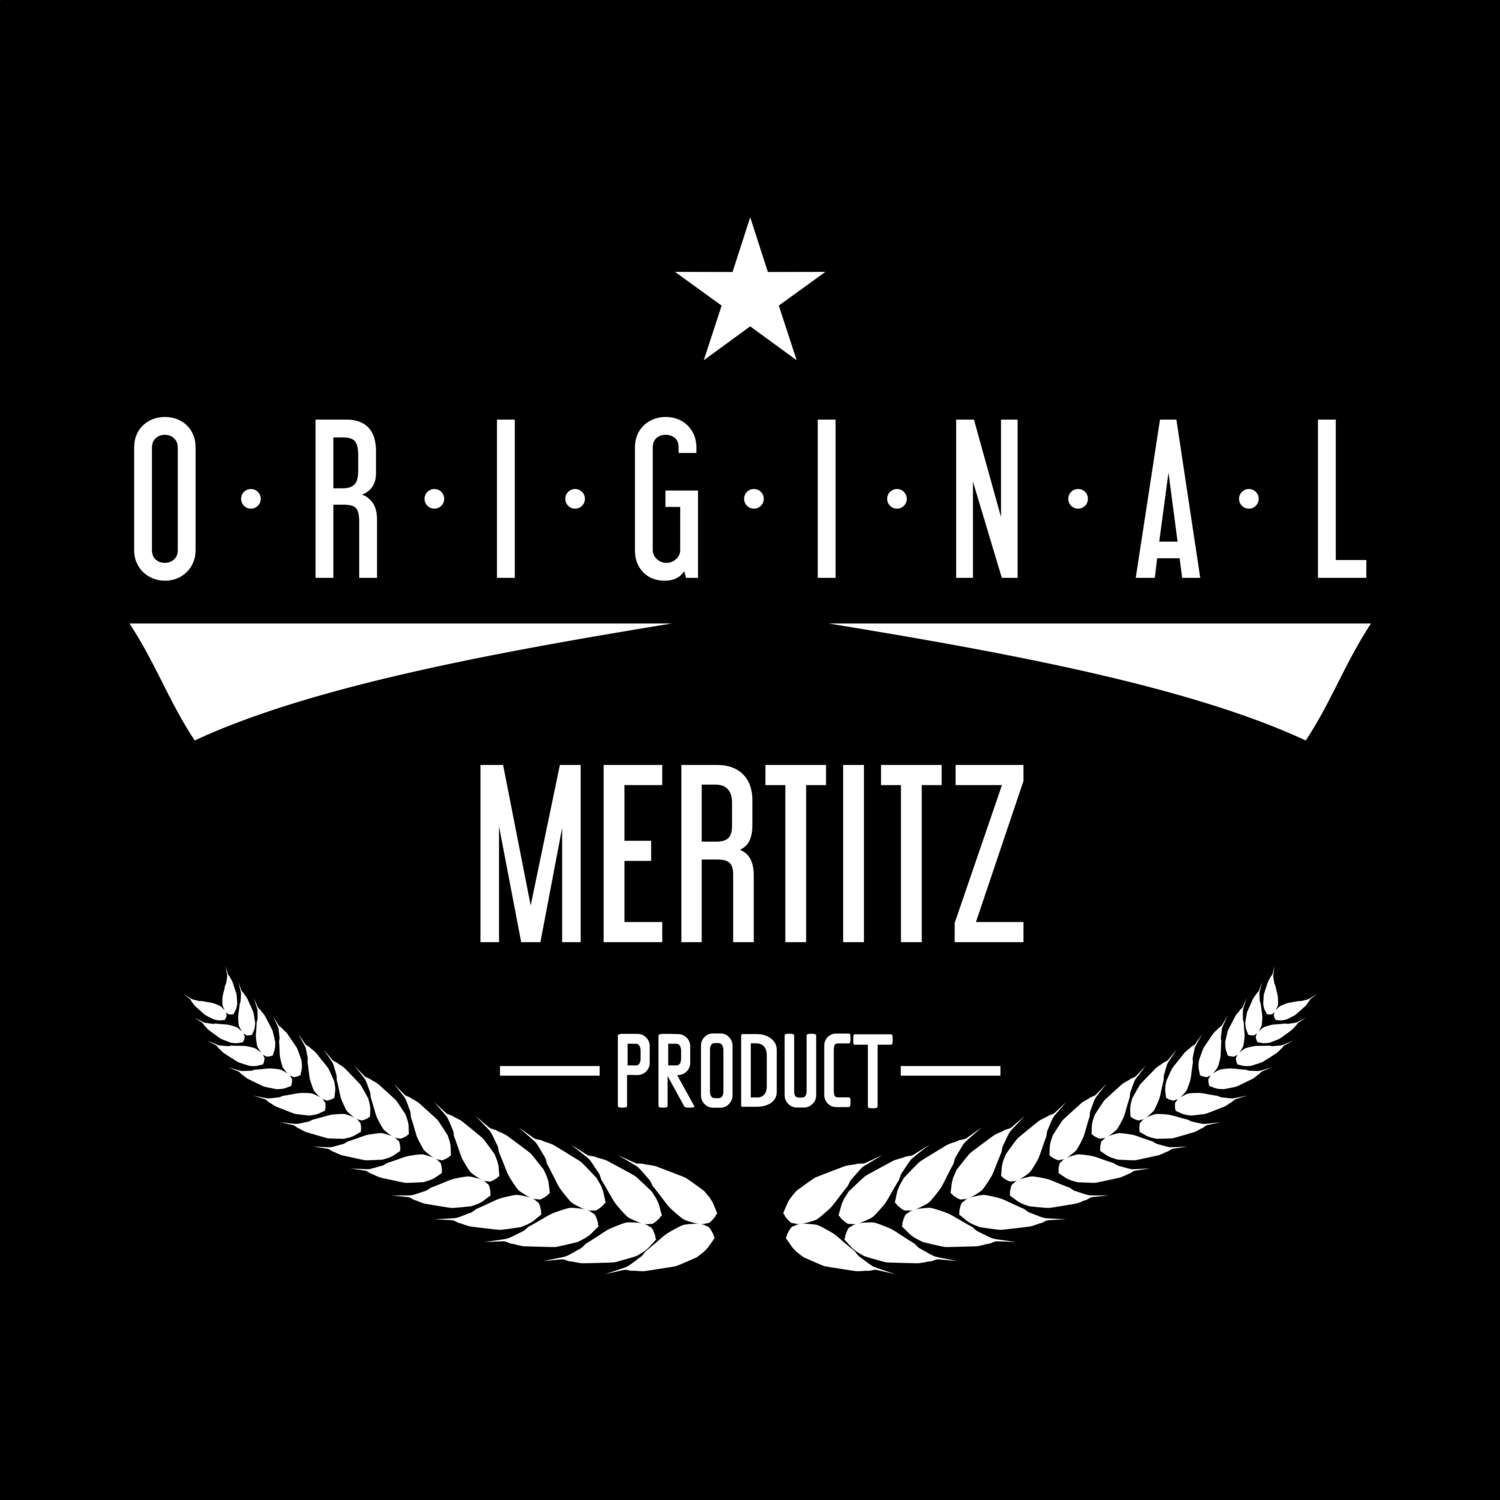 Mertitz T-Shirt »Original Product«